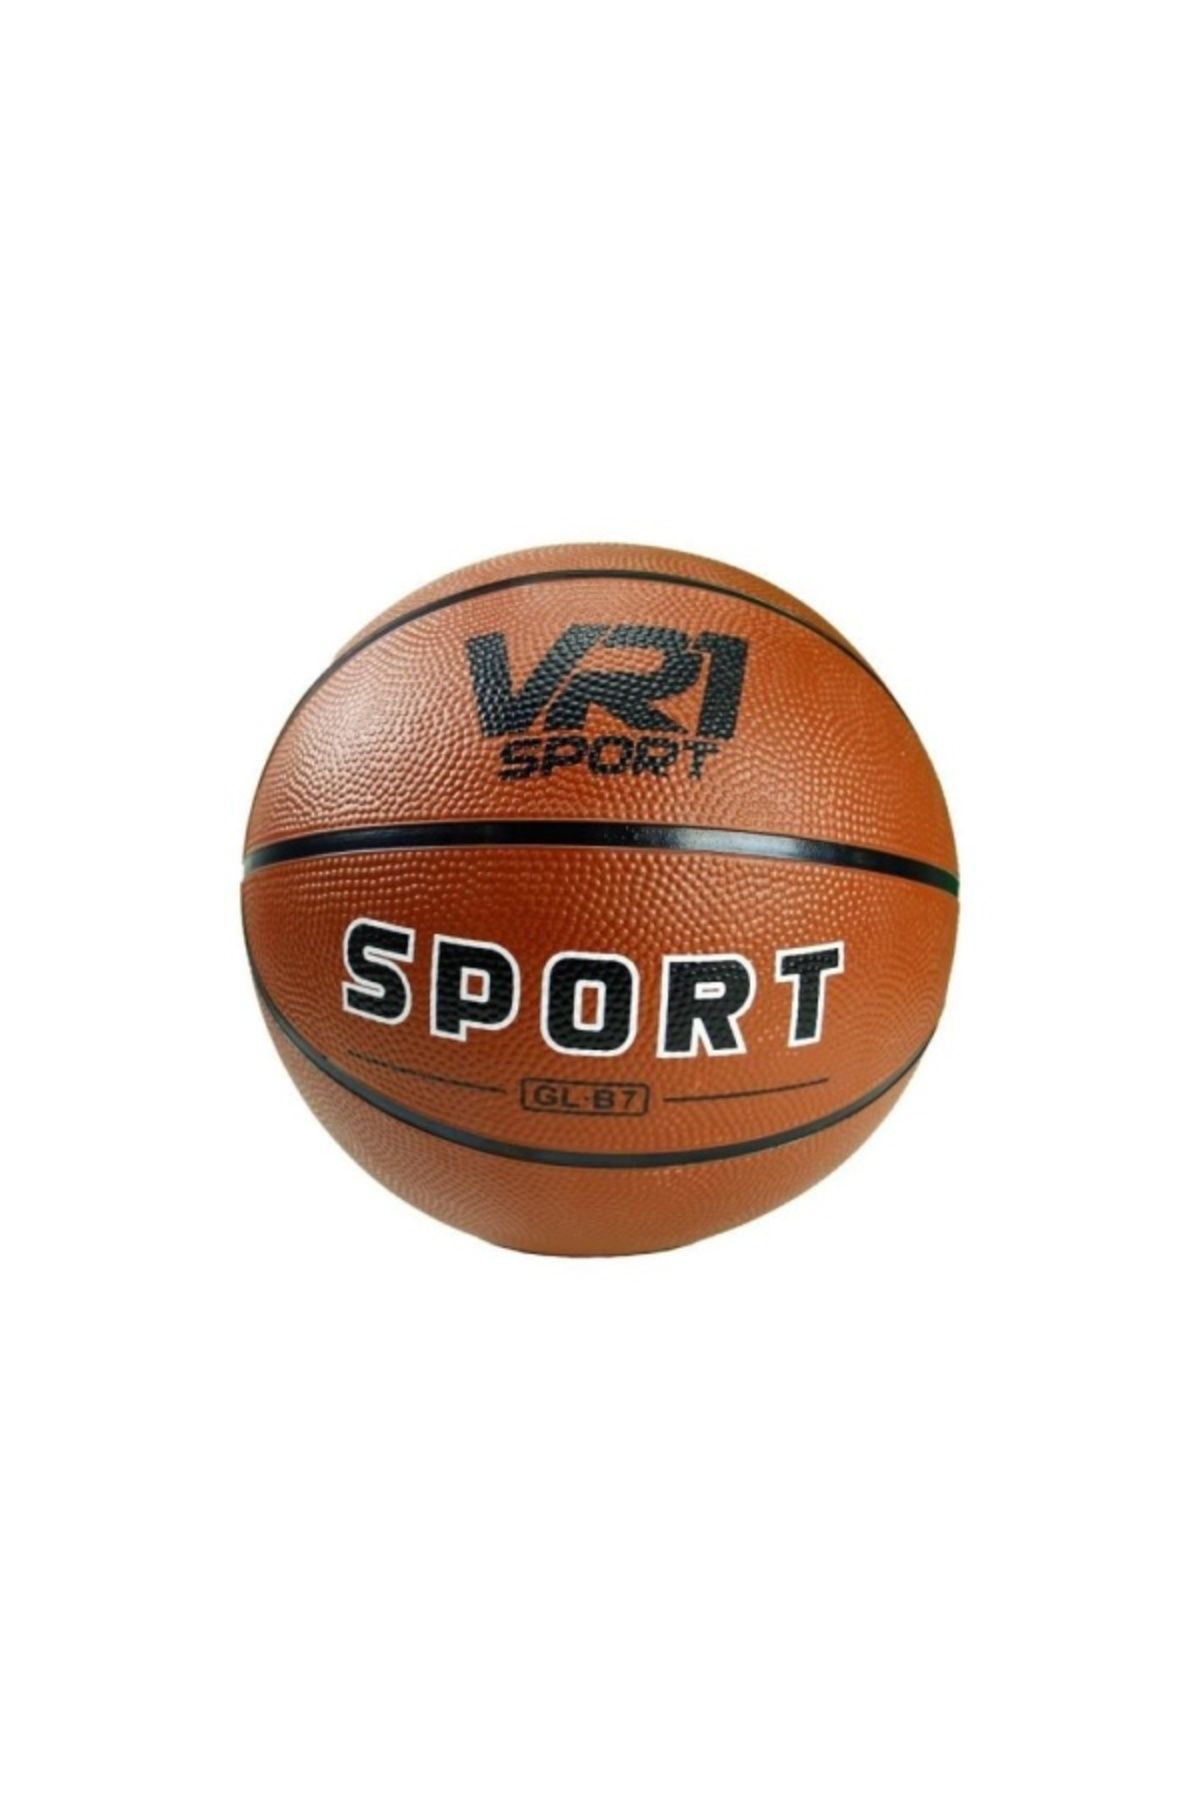 VARDEM OYUNCAK XL-03 VR1 Sport Basketbol Topu No:7